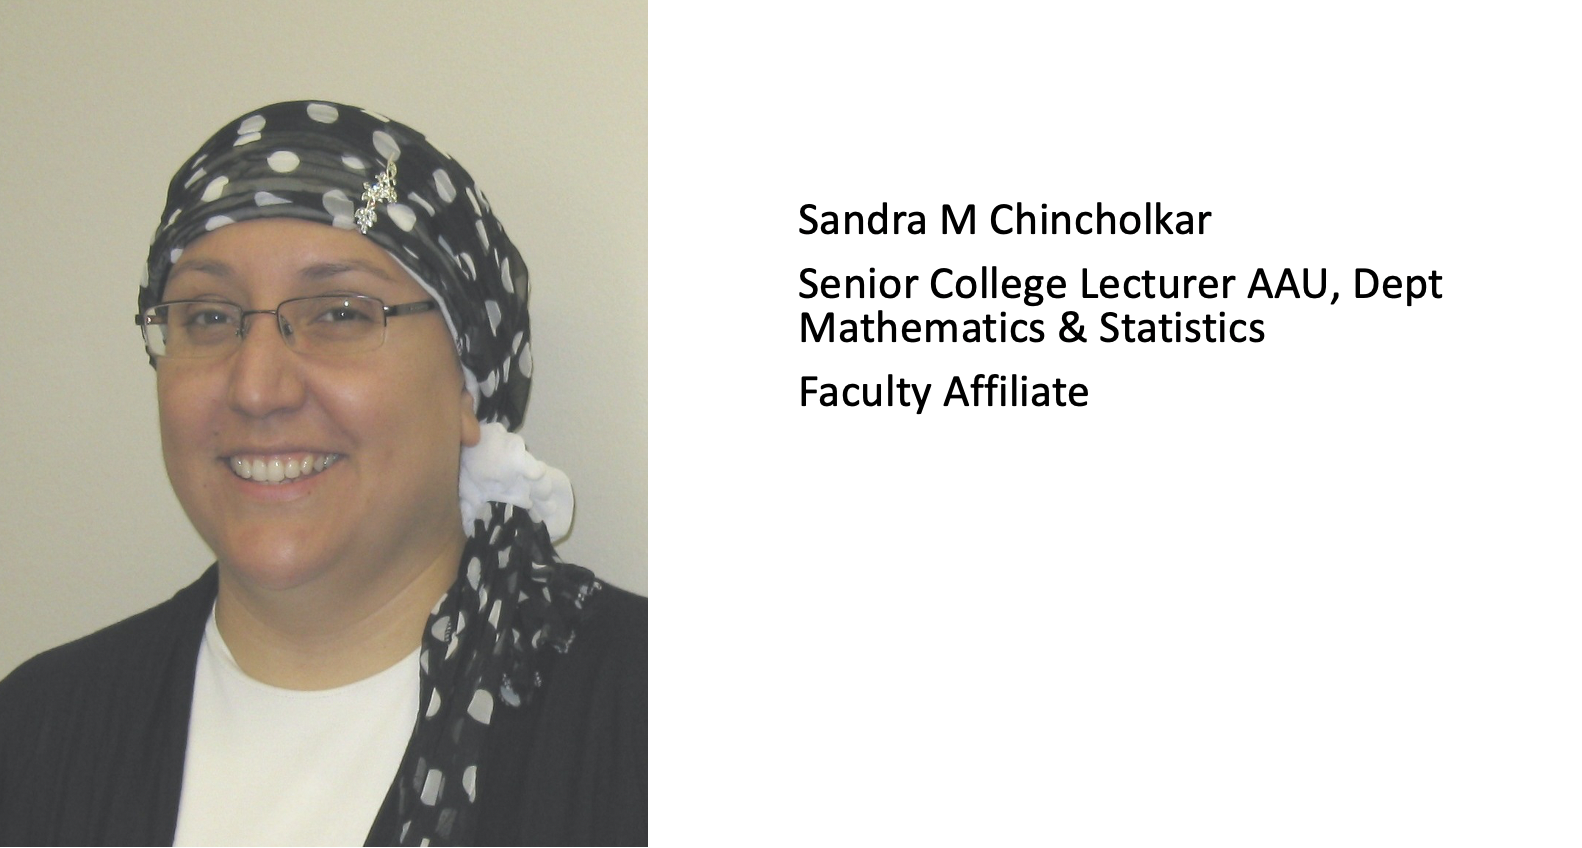 Sandra M Chincholkar, Senior College Lecturer AAU, Dept Mathematics & Statistics as an affiliate on the LLC web page.